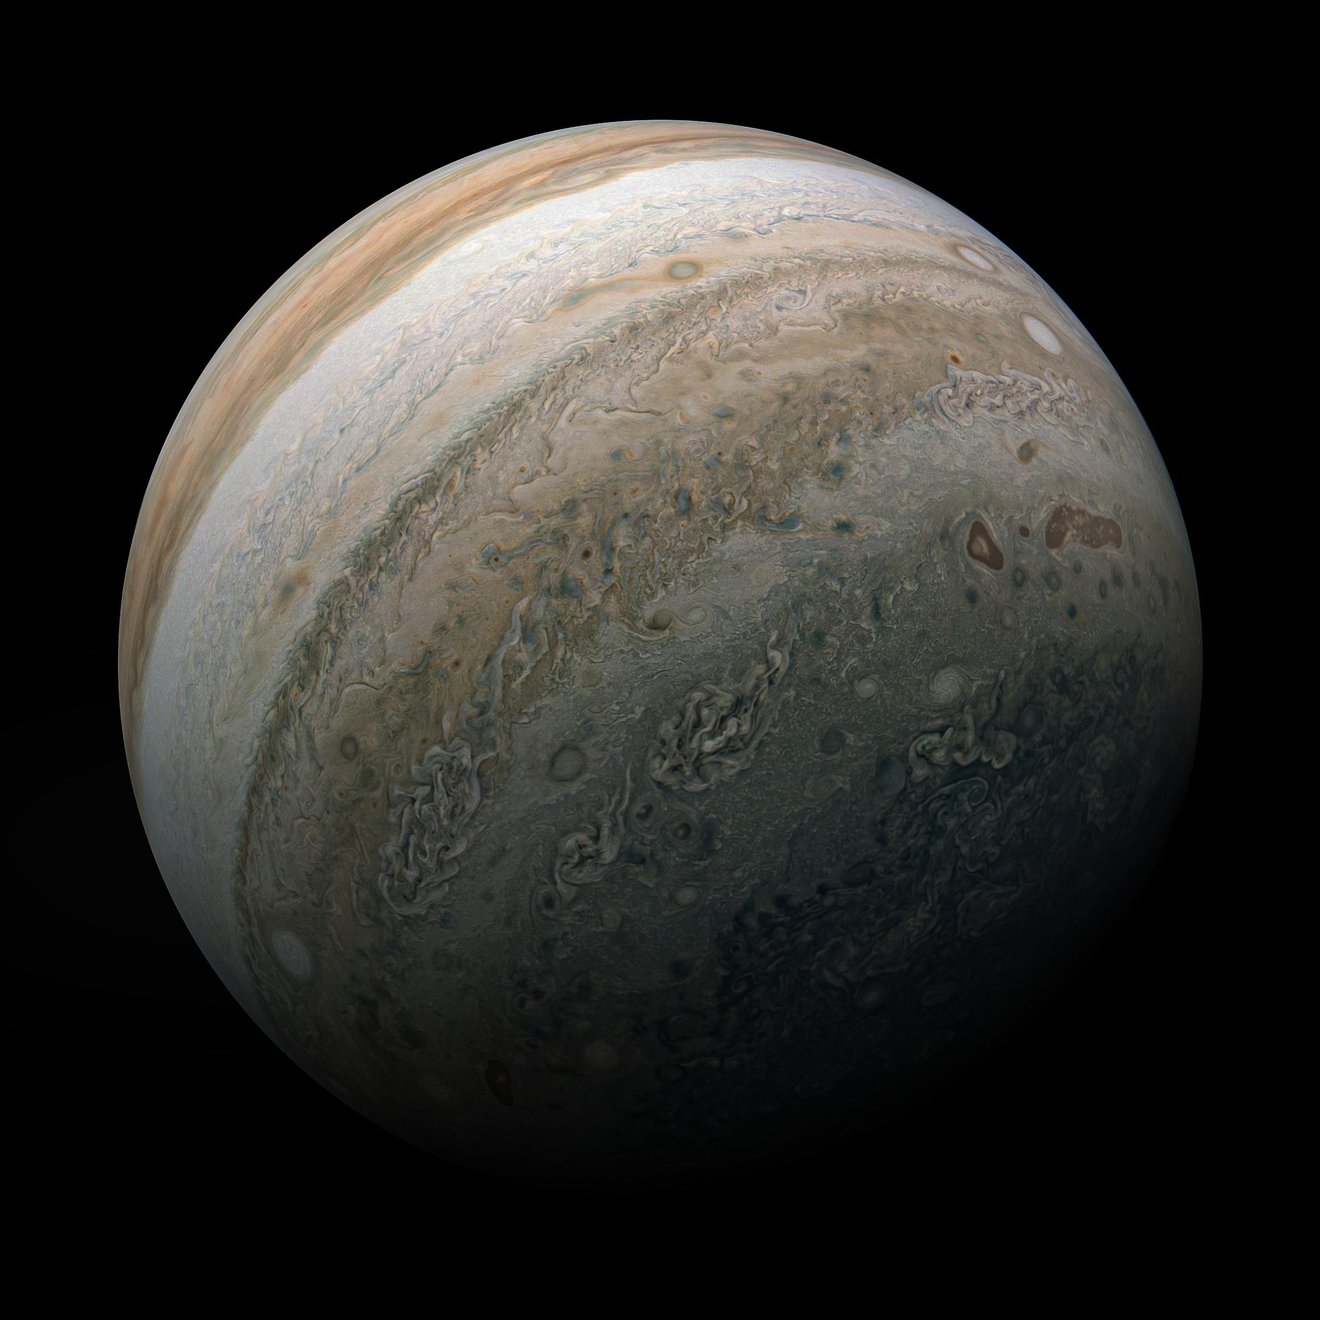 Gigantic Jupiter-like alien planet observed still 'in the womb'